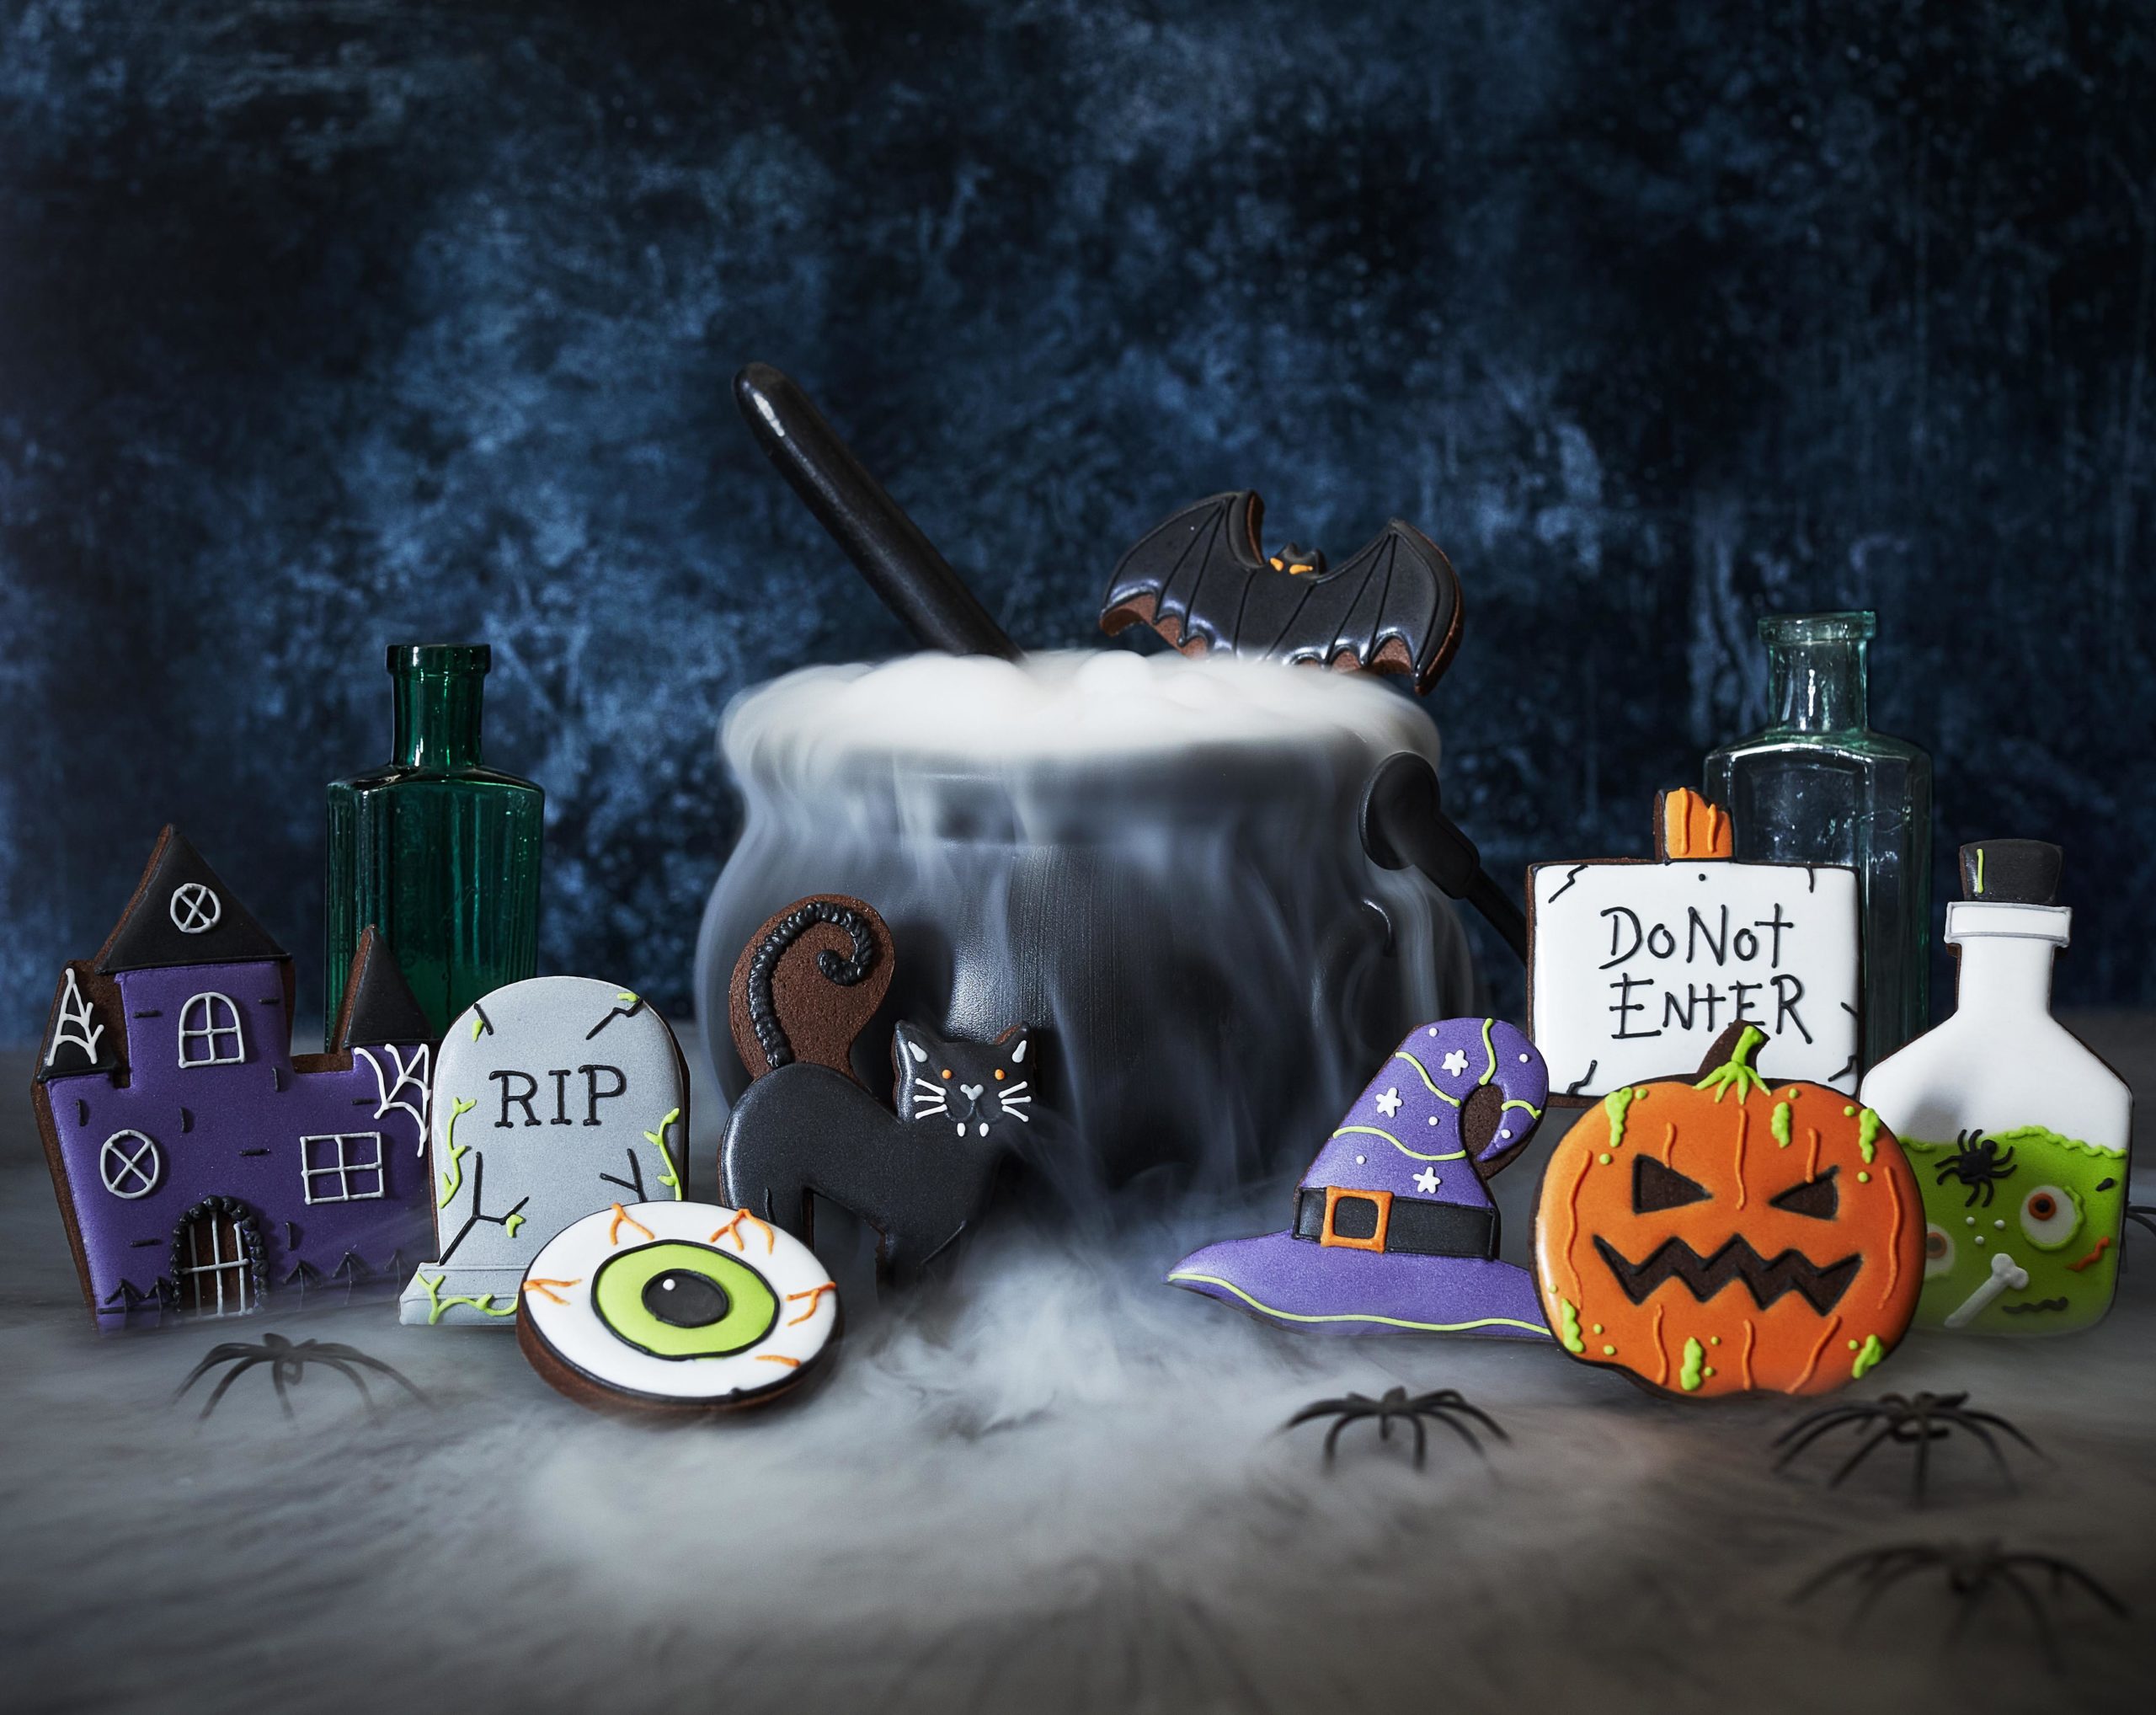 Spooky Treats For Halloween